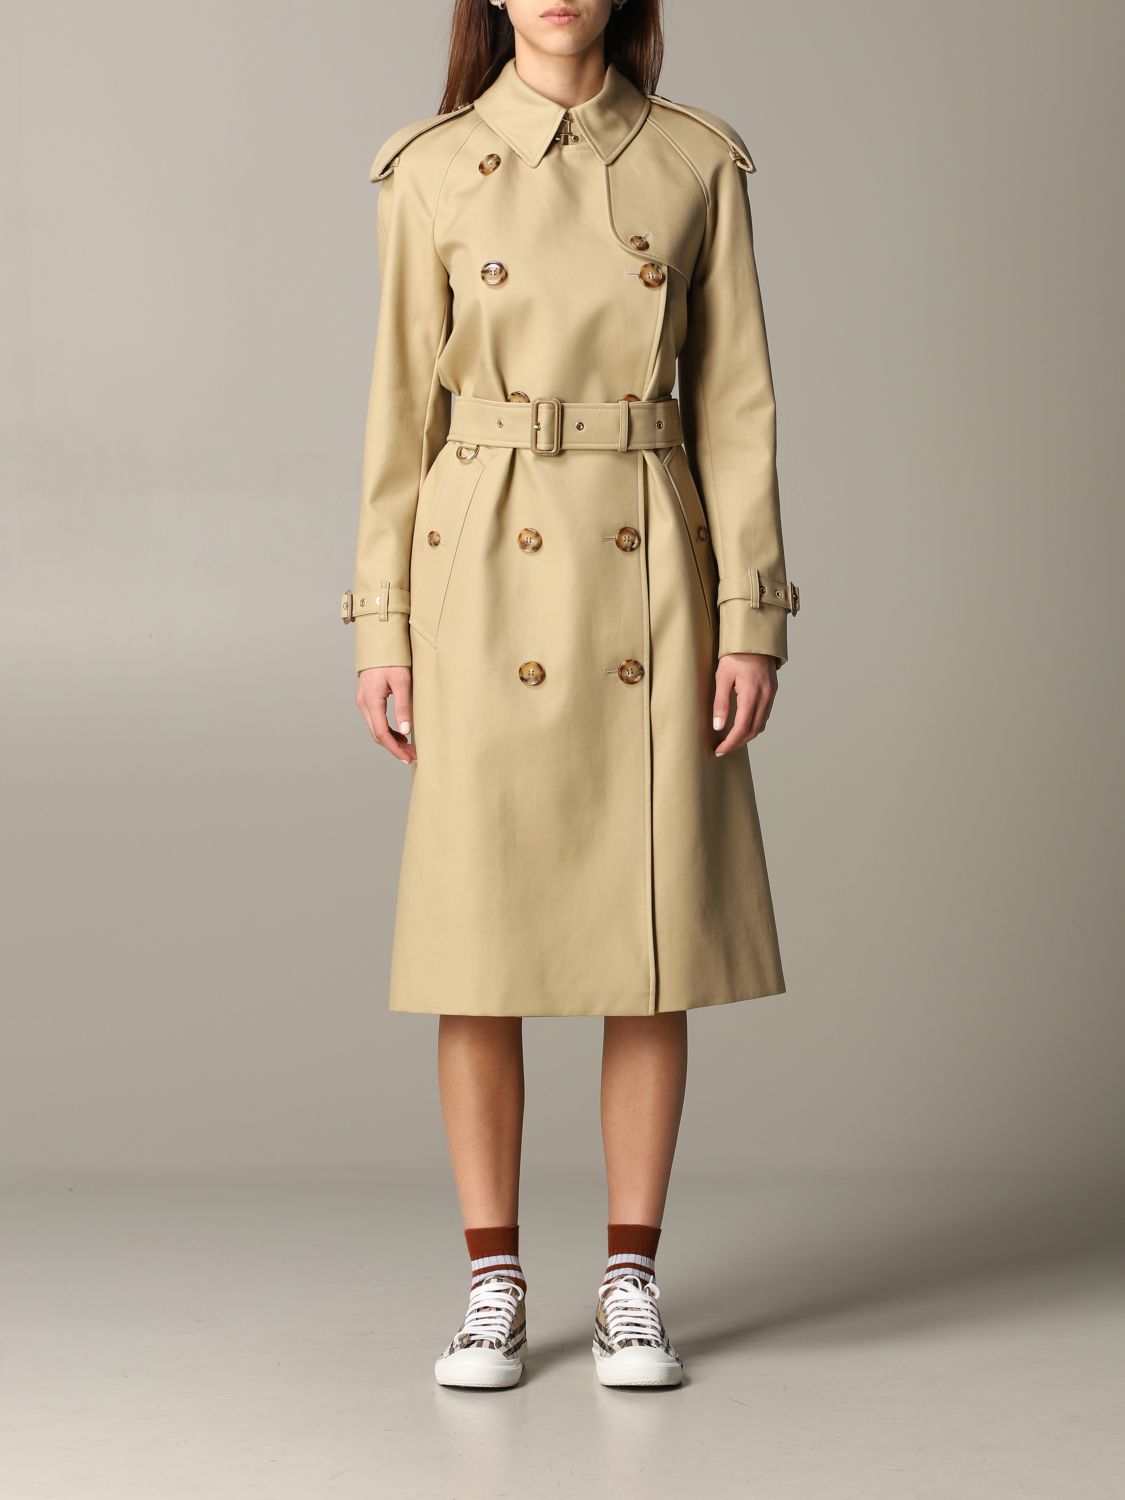 burberry women's long trench coat